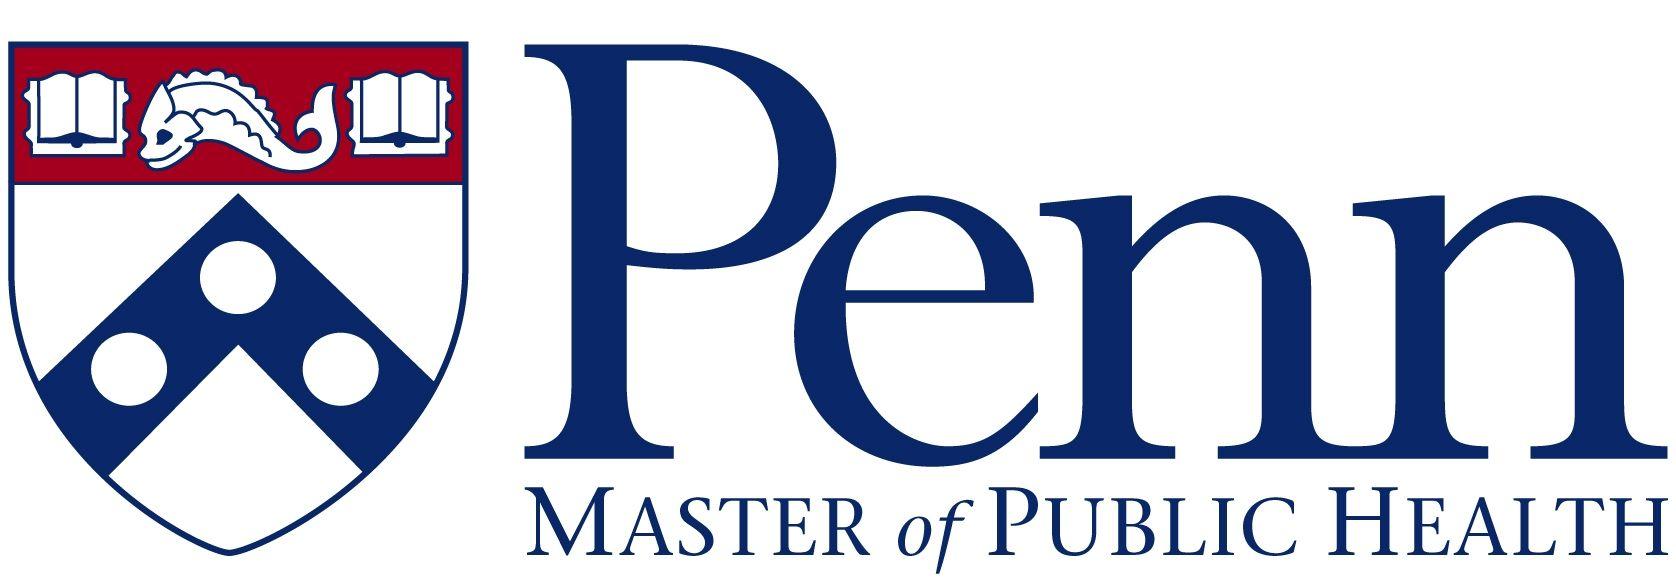 Mph Logo - Program Overview. Master of Public Health. Center for Public